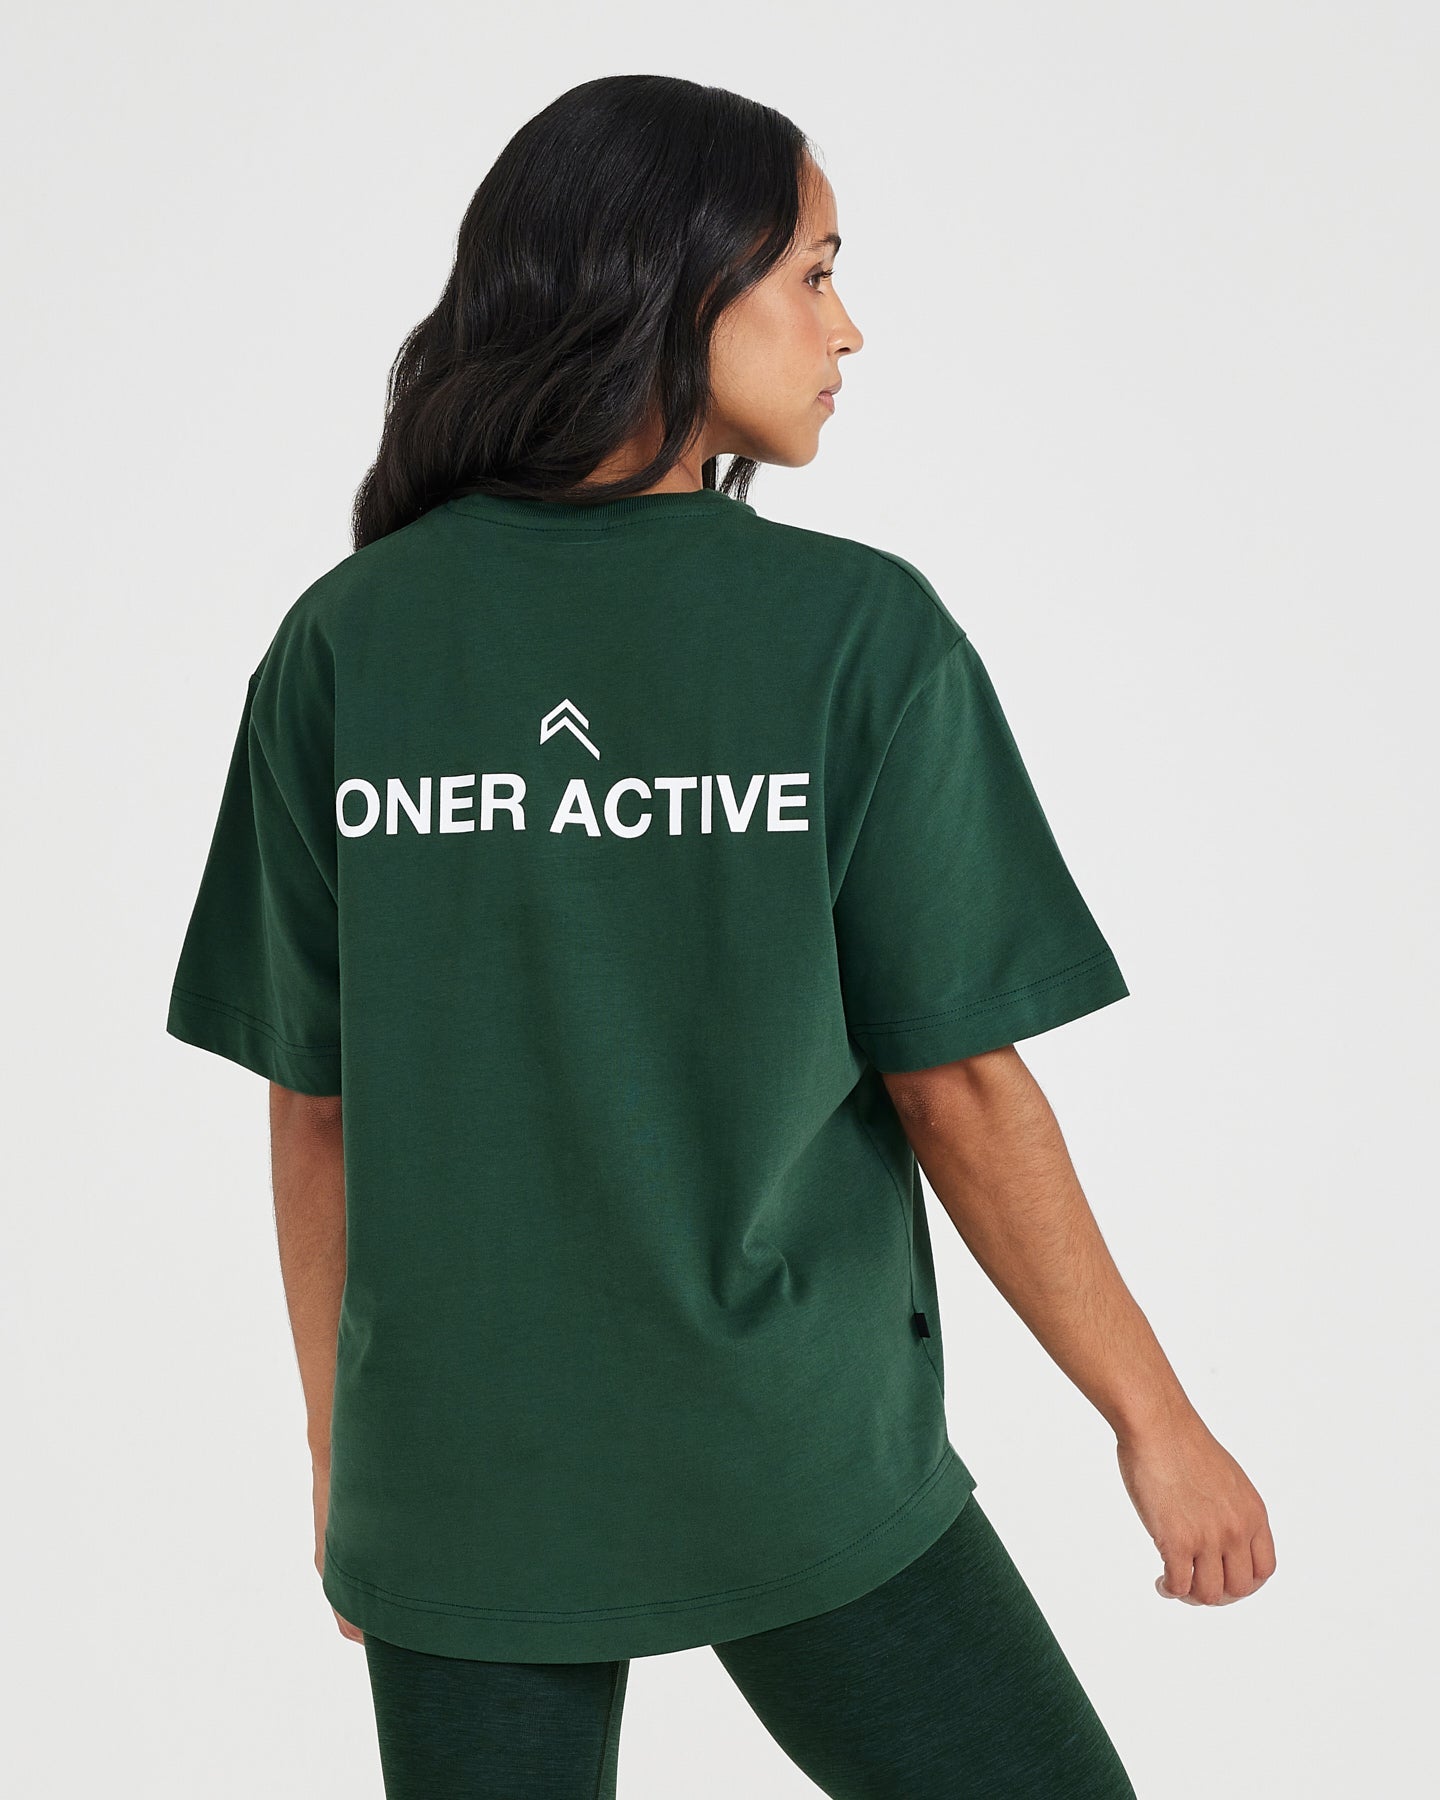 Oversized Oner t-shirt dupe : r/OnerActive